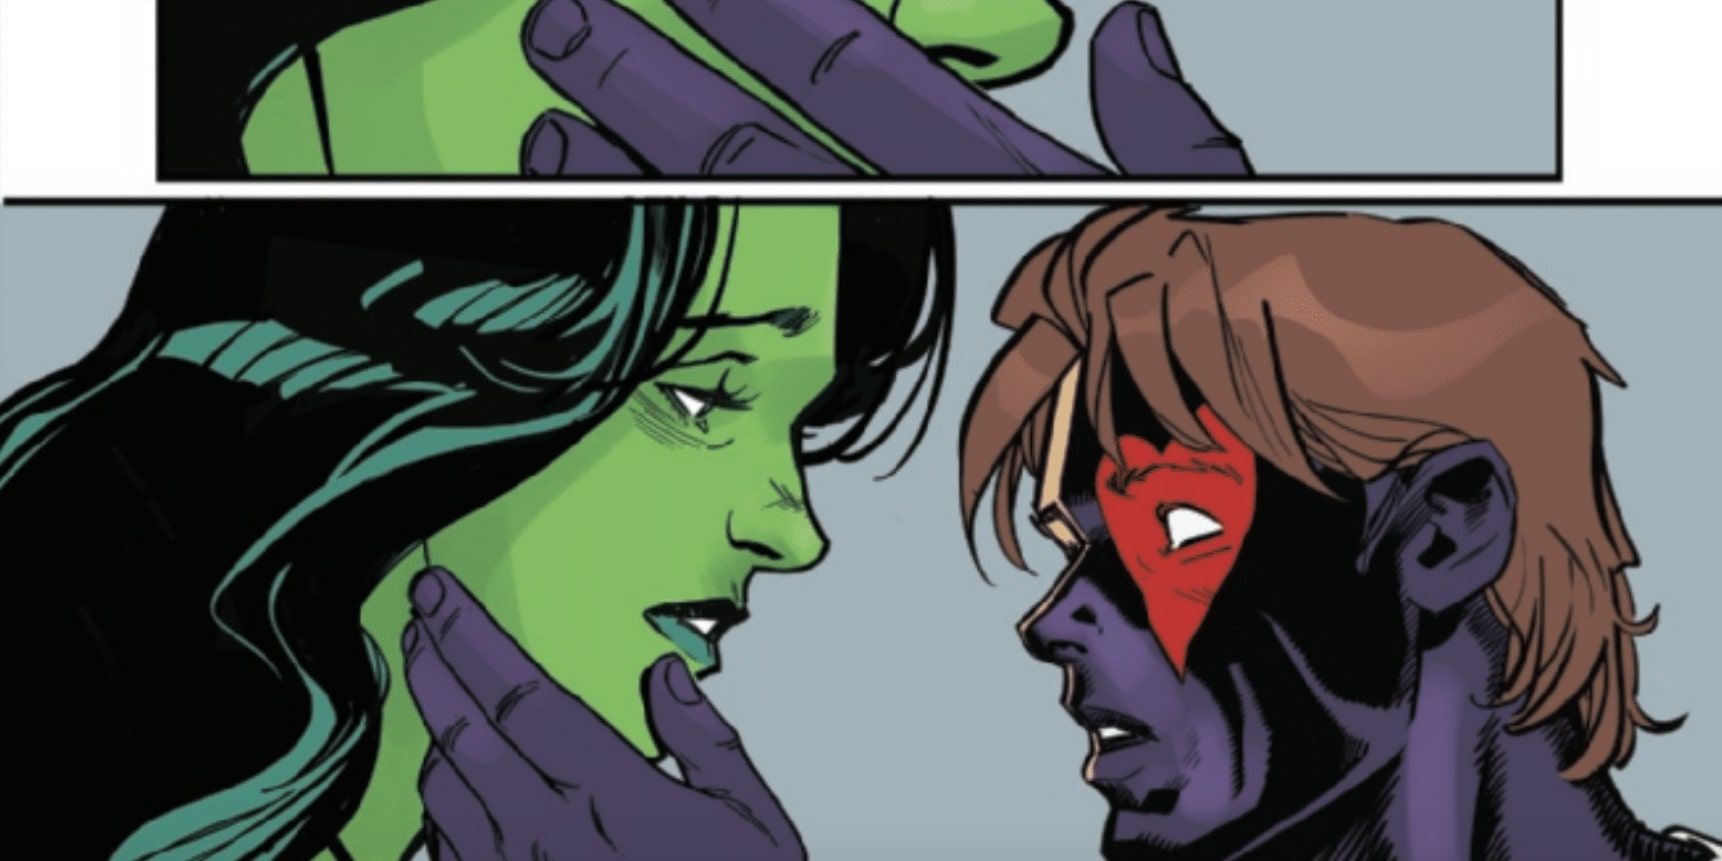 Jack of Hearts touche le visage de She-Hulk dans She-Hulk # 6